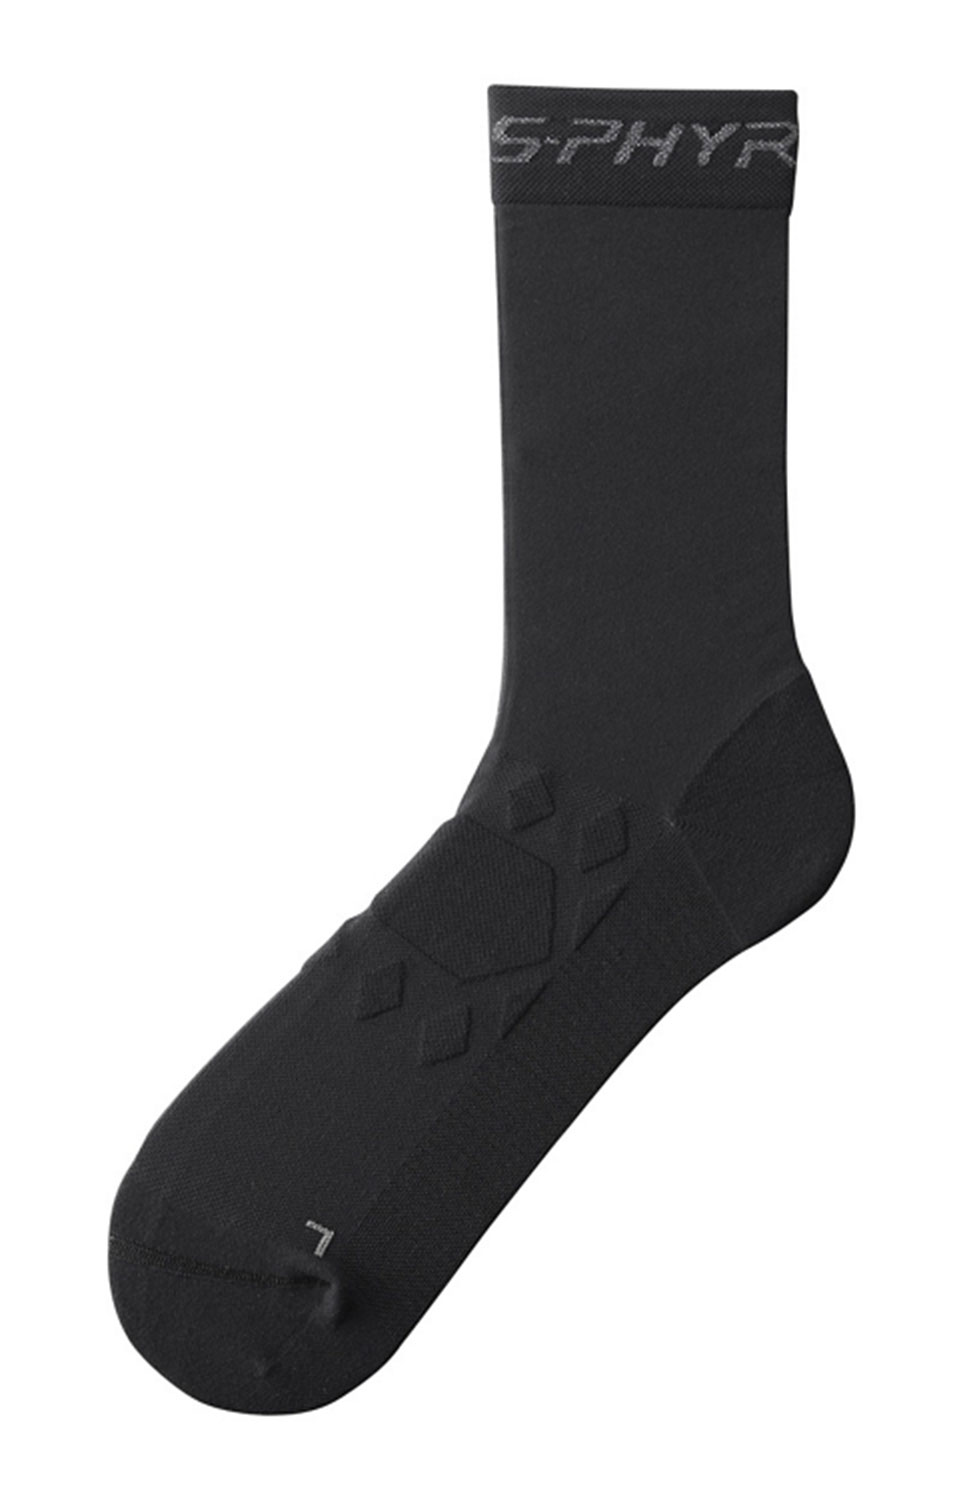 Shimano S-Phyre Tall Socks | R\u0026A Cycles